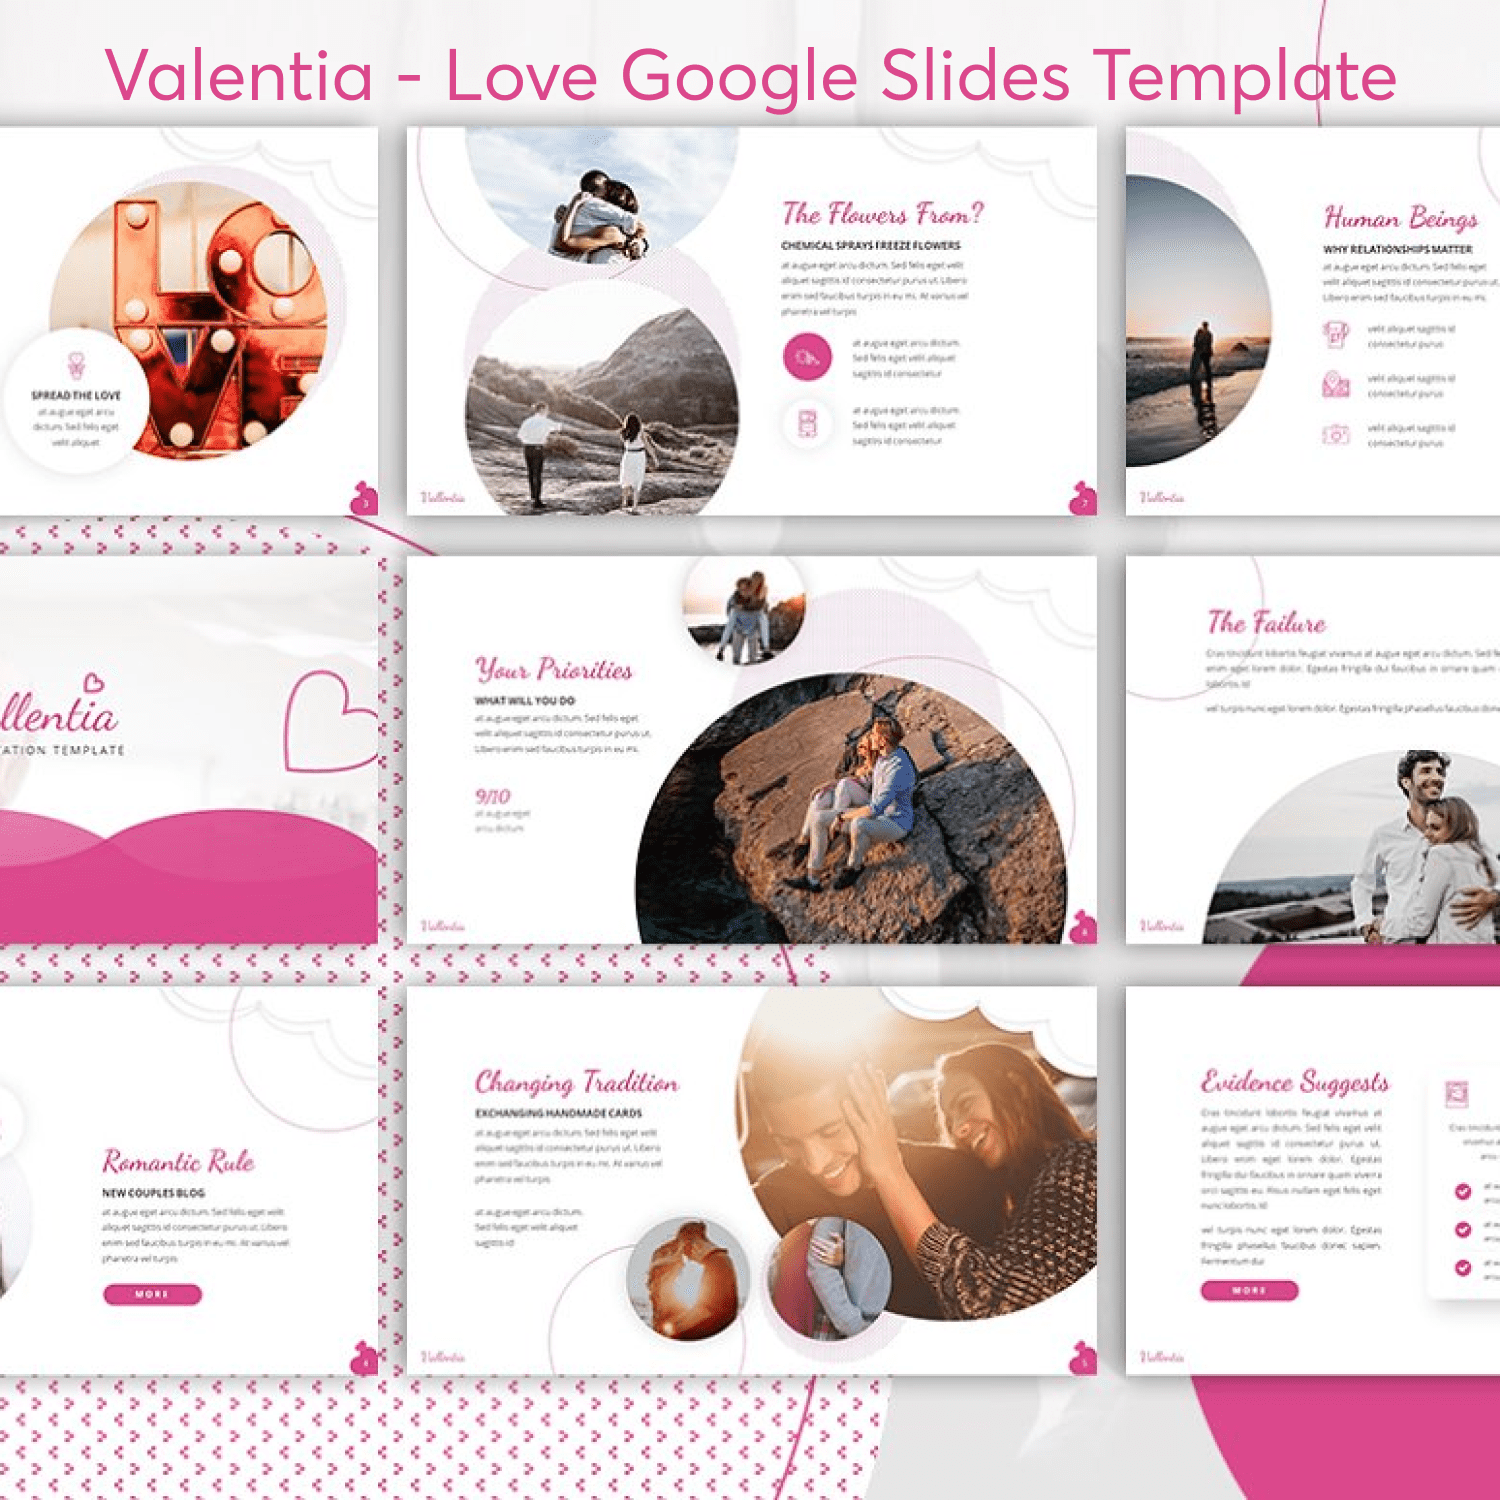 Valentia - Love Google Slides Template Examples.